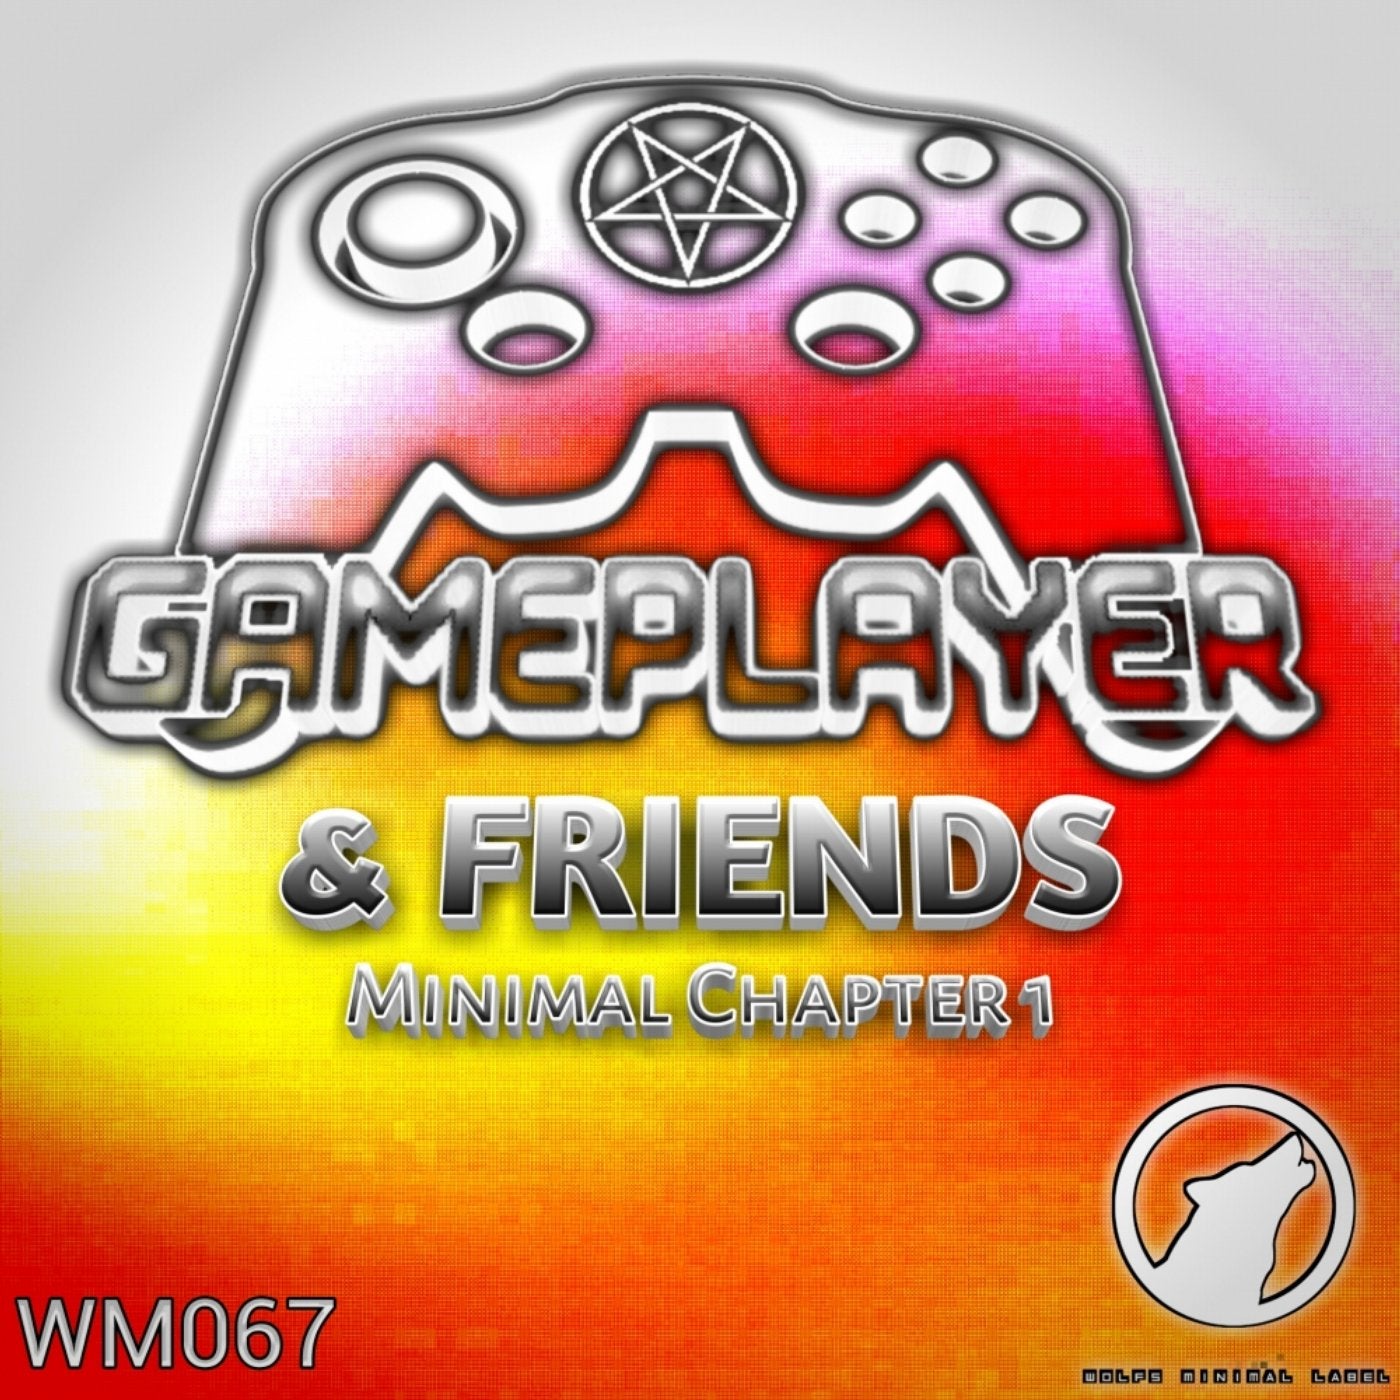 Gameplayer & Friends: Minimal Chapter 1